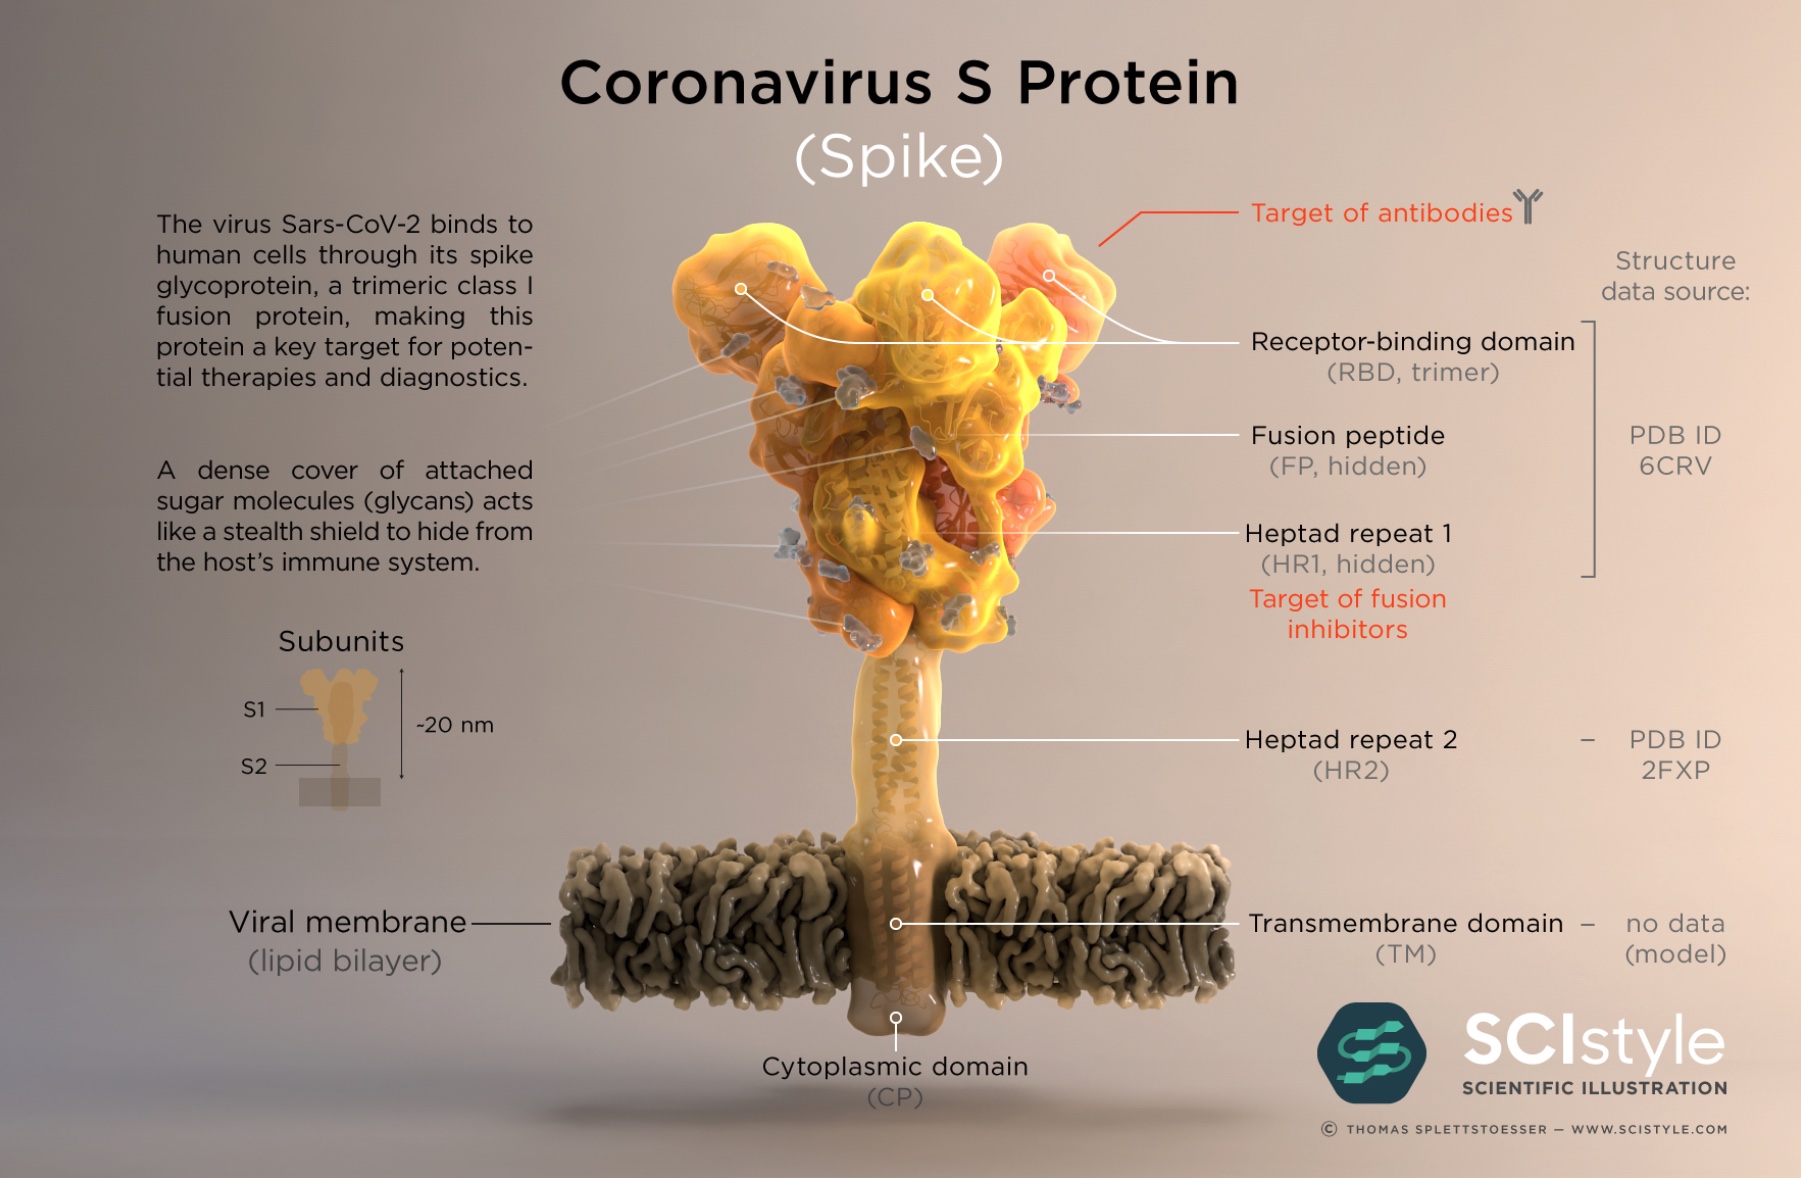 Coronavirus S Protein, journal of wild culture, ©2020